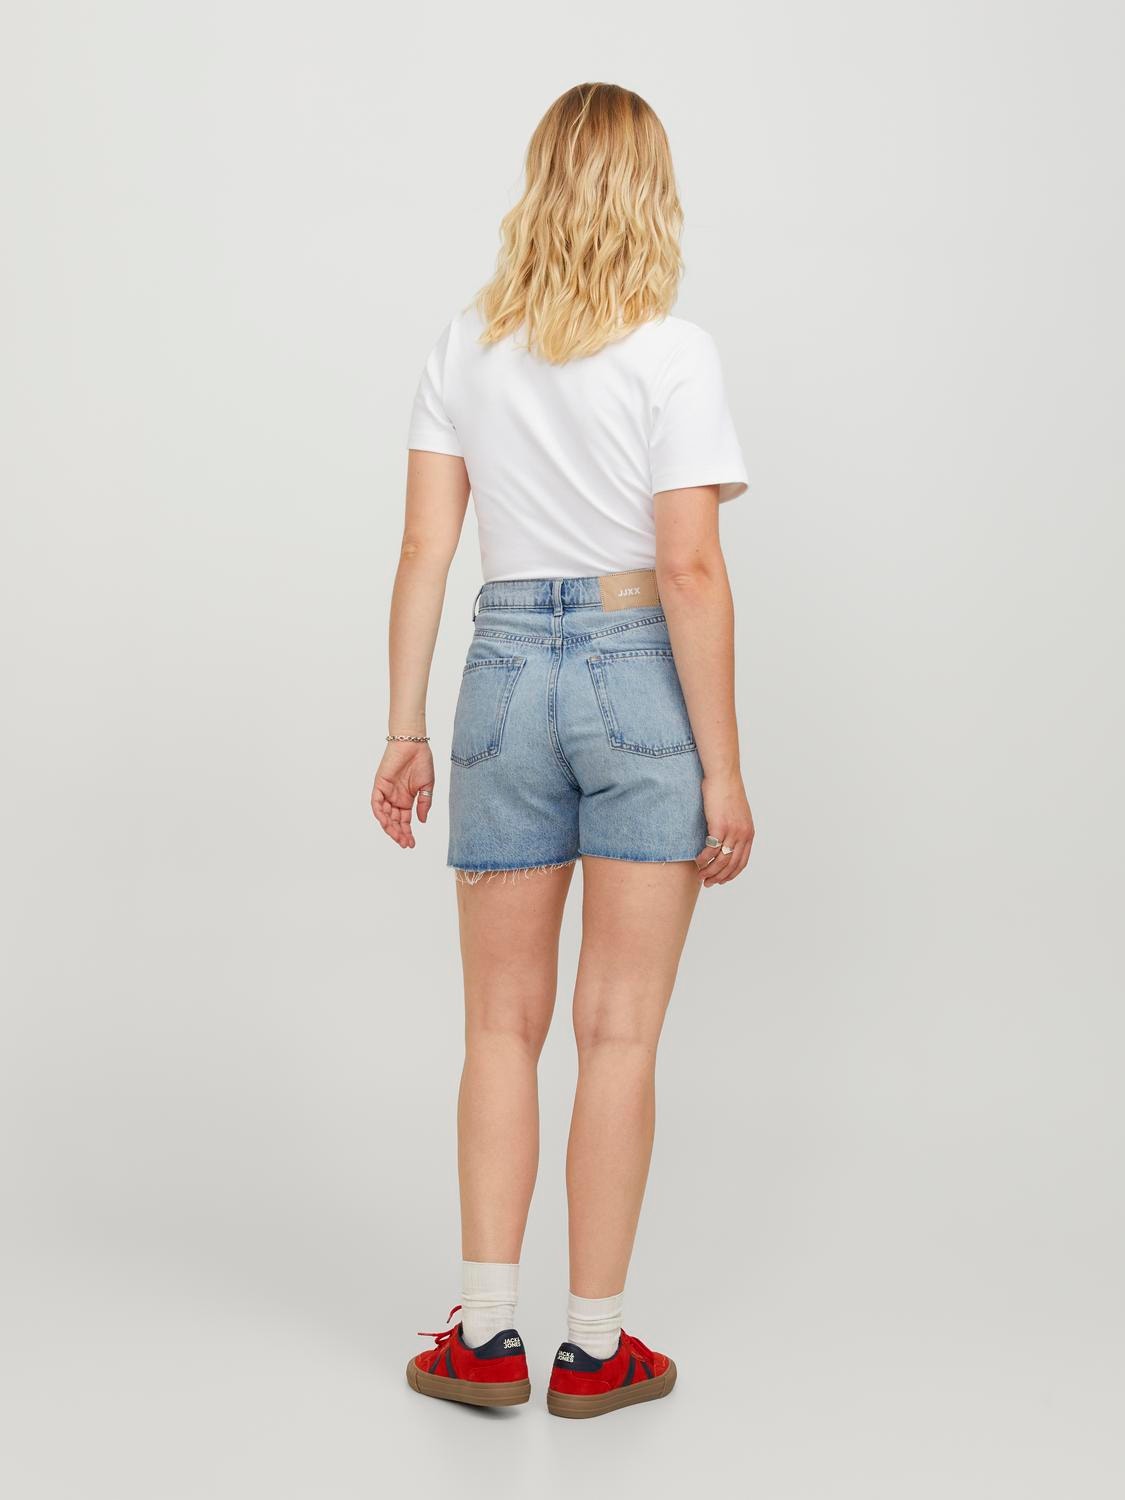 JXAURA Denim shorts with 30% discount!